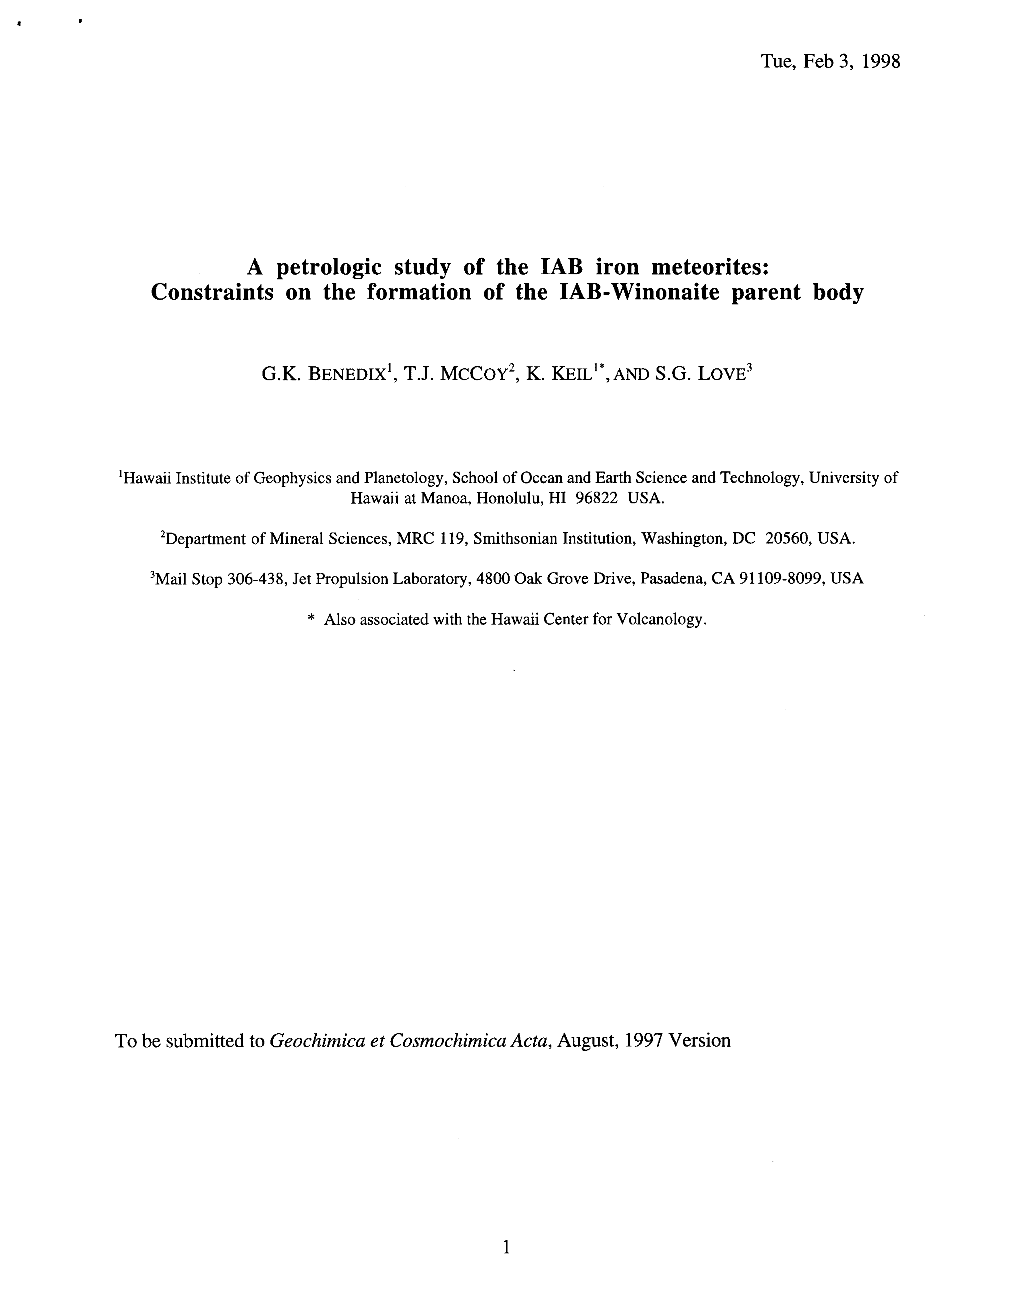 A Petrologic Study of the IAB Iron Meteorites: Constraints on the Formation Ofthe IAB-Winonaite Parent Body